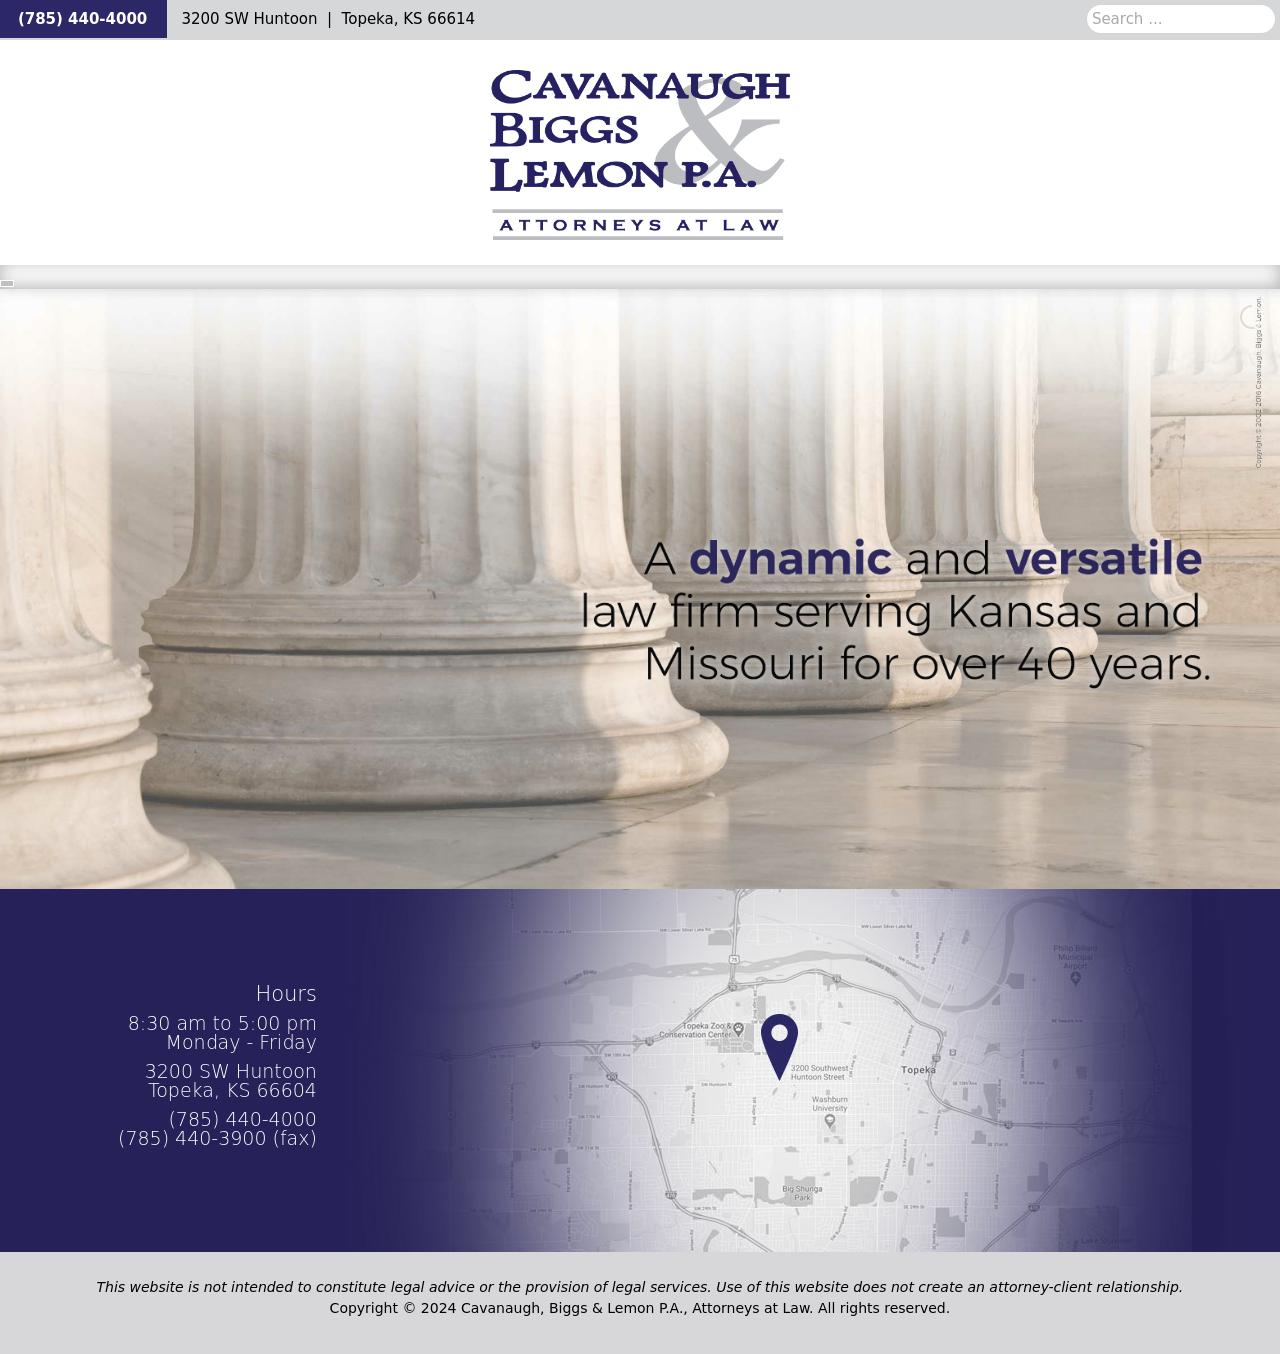 Cavanaugh, Biggs & Lemon PA - Topeka KS Lawyers